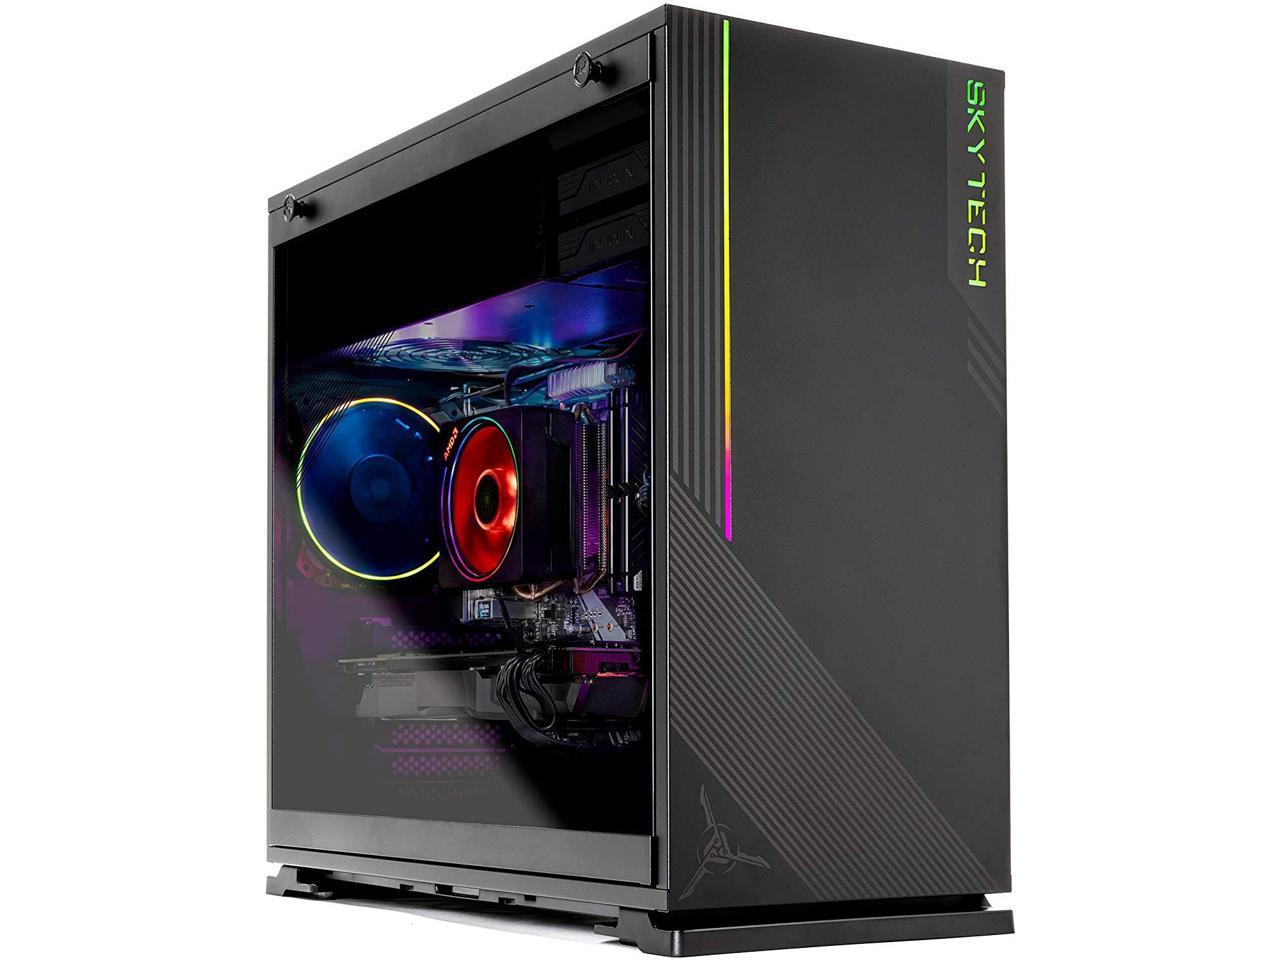 SkyTech Azure Gaming Computer PC Desktop – AMD RYZEN 7 3700X, RTX 2070 Super 8G, 1TB SSD, 16G DDR4 3000, B450 Motherboard, 802.11ac Wi-Fi, ARGB, Window 10 Home